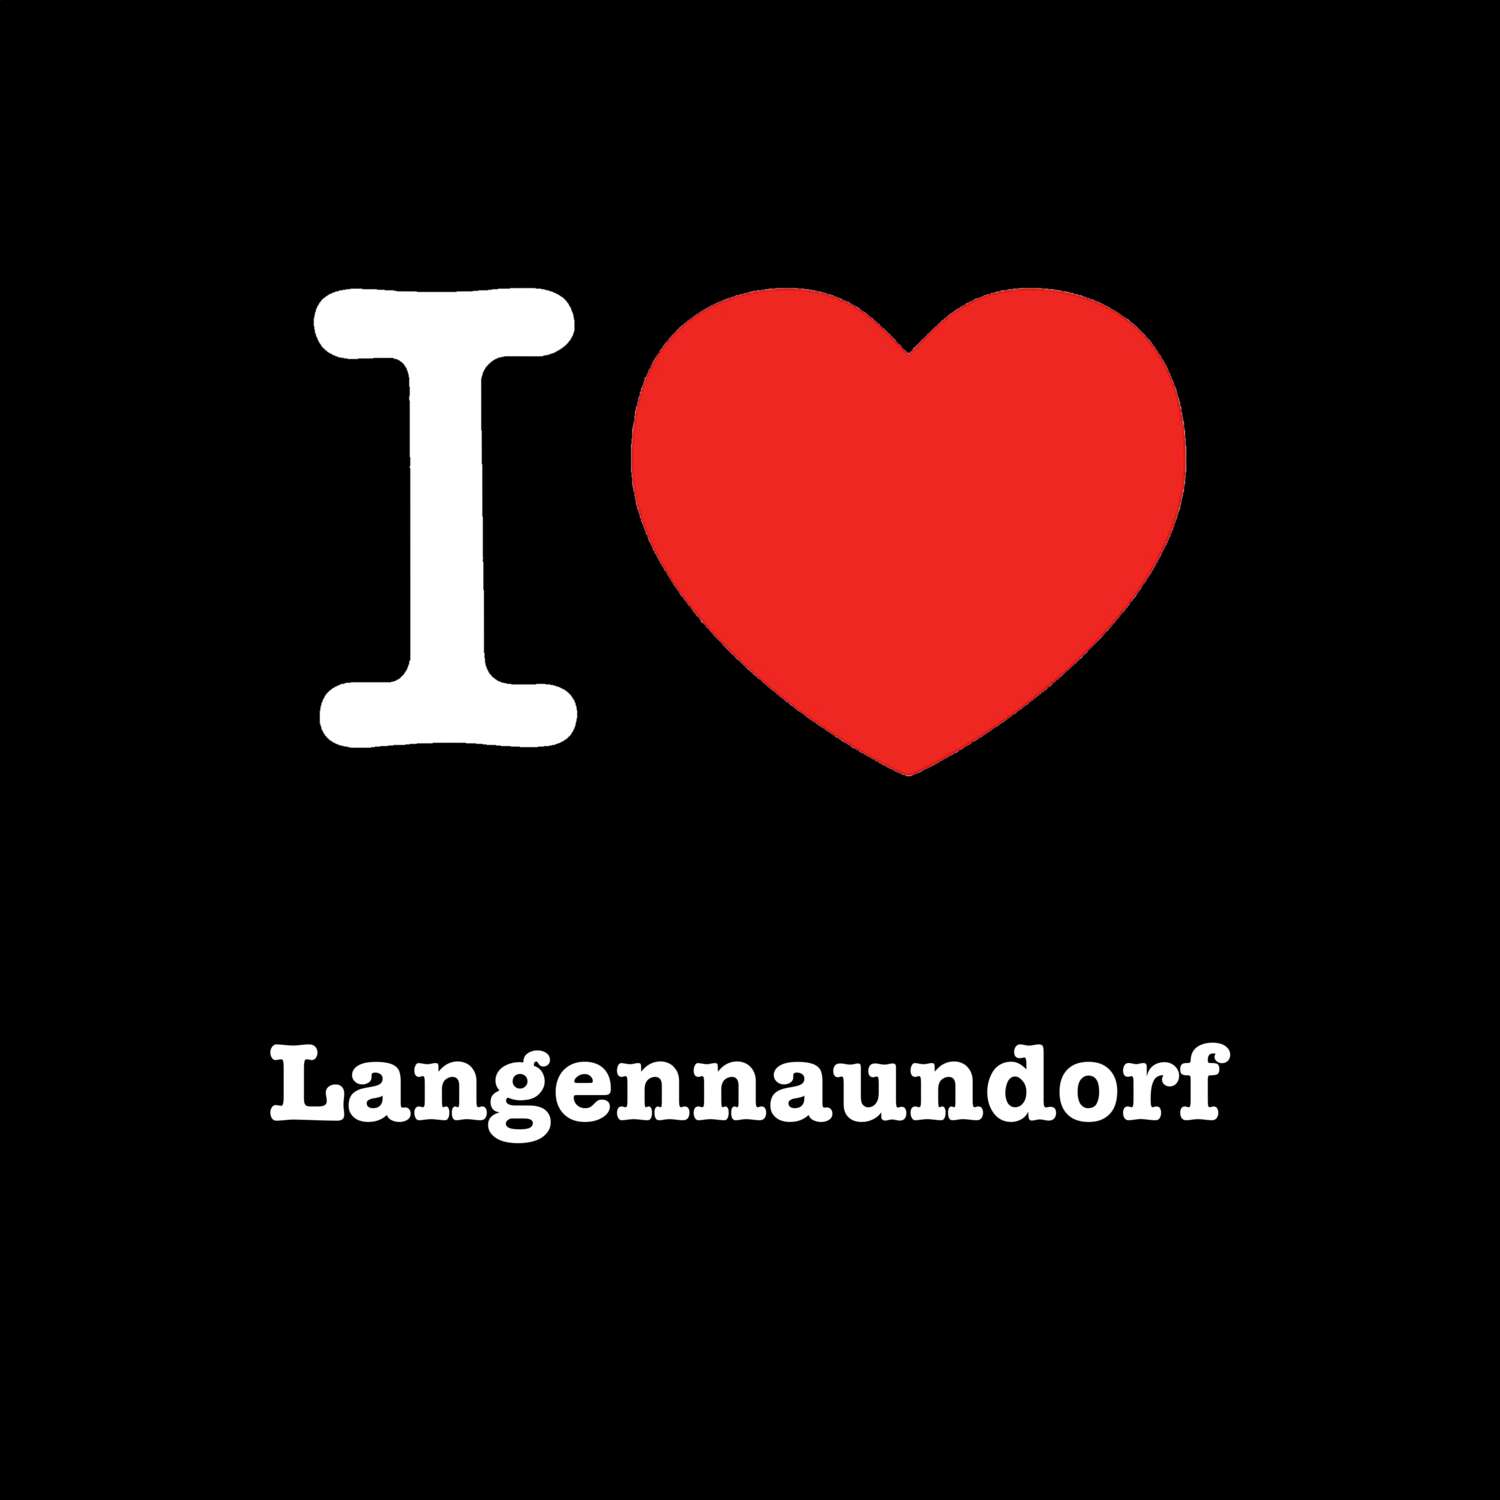 Langennaundorf T-Shirt »I love«